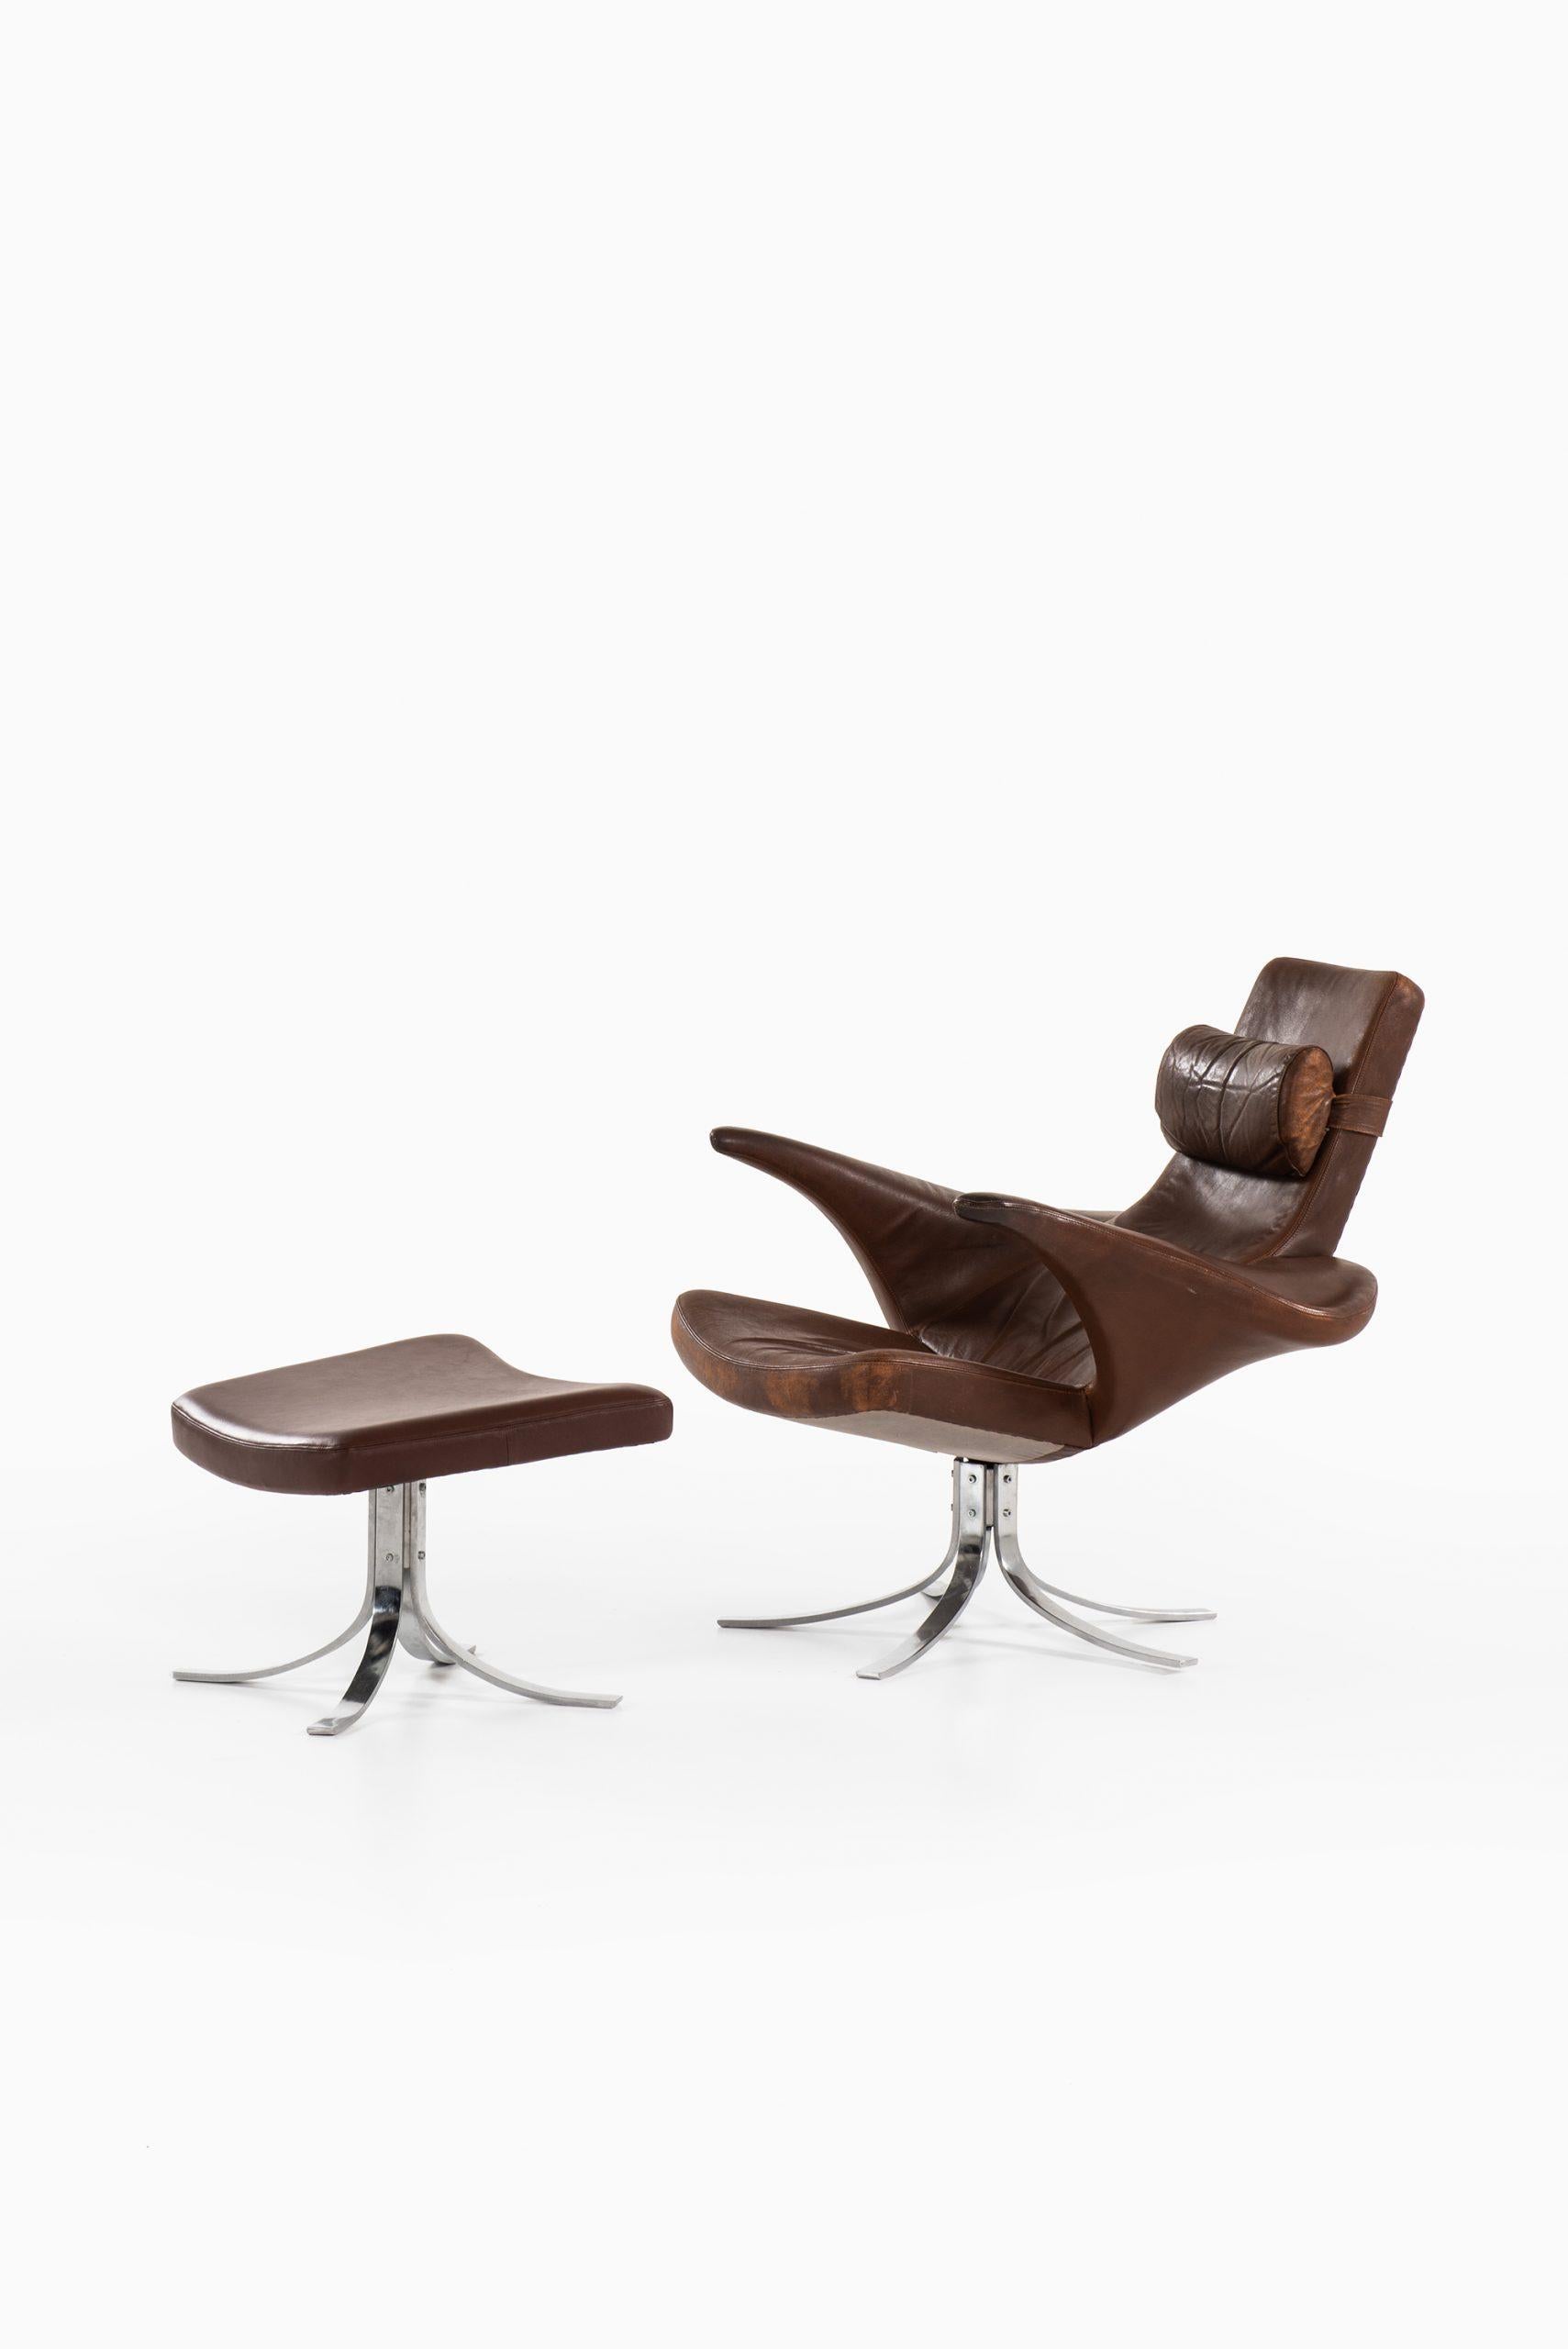 Gösta Berg Easy Chair with Stool Model Måsen / Seagull by Fritz Hansen For  Sale at 1stDibs | seagull chair